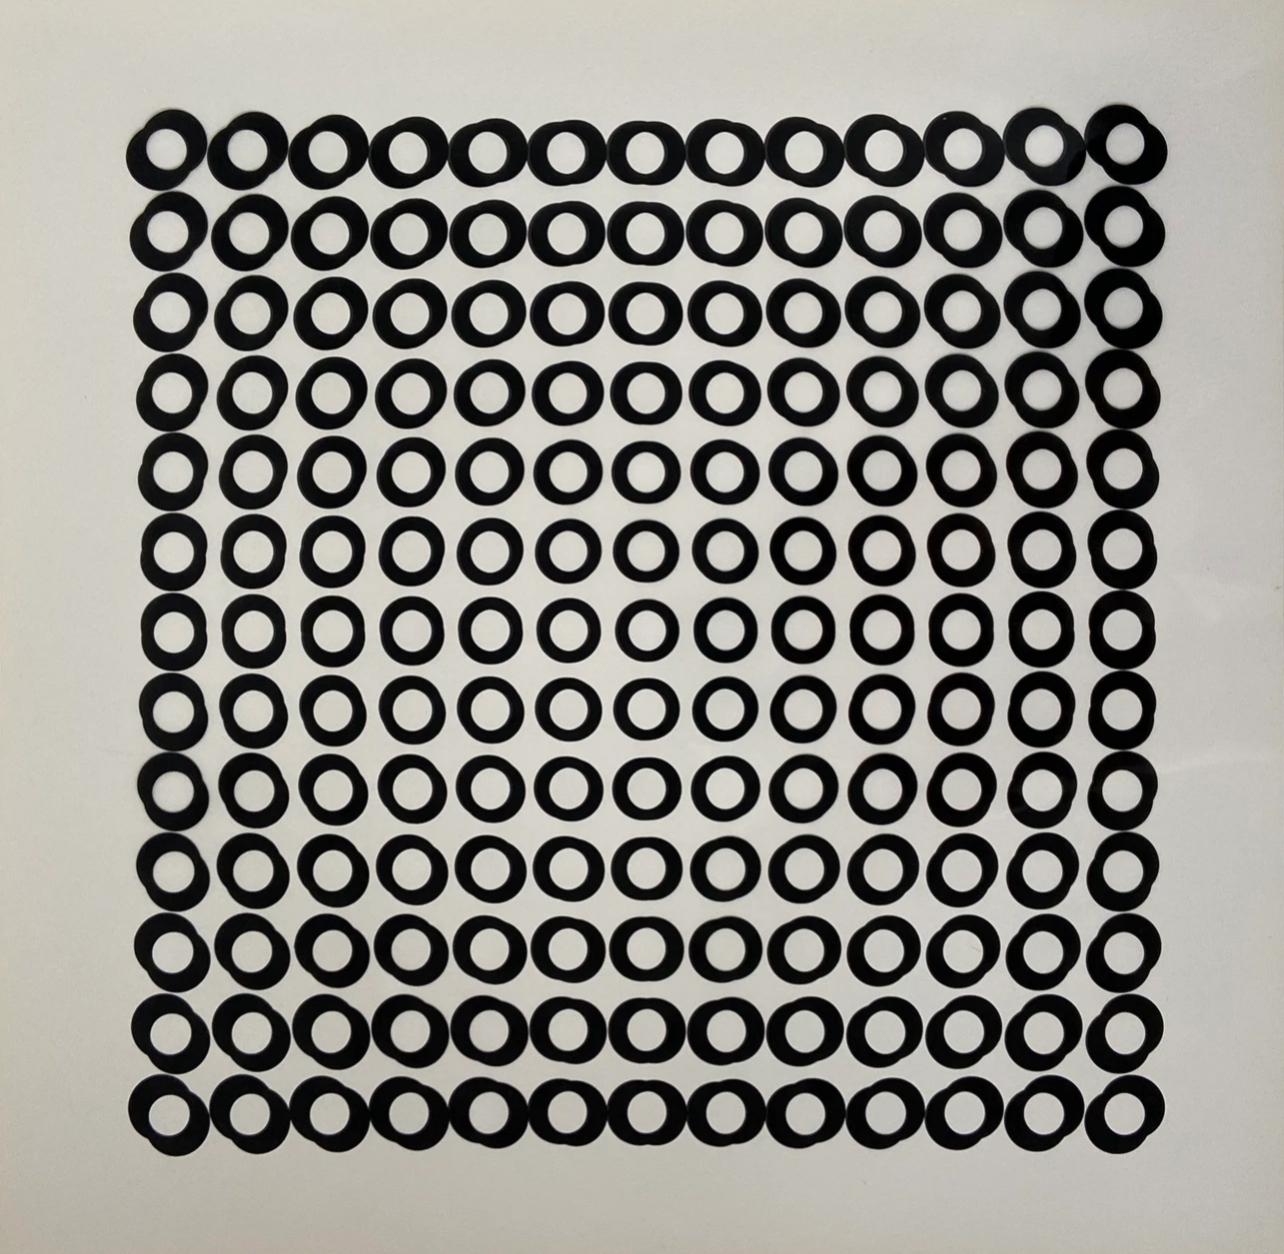 Vasarely, Composition, Tiefenbilder (after)